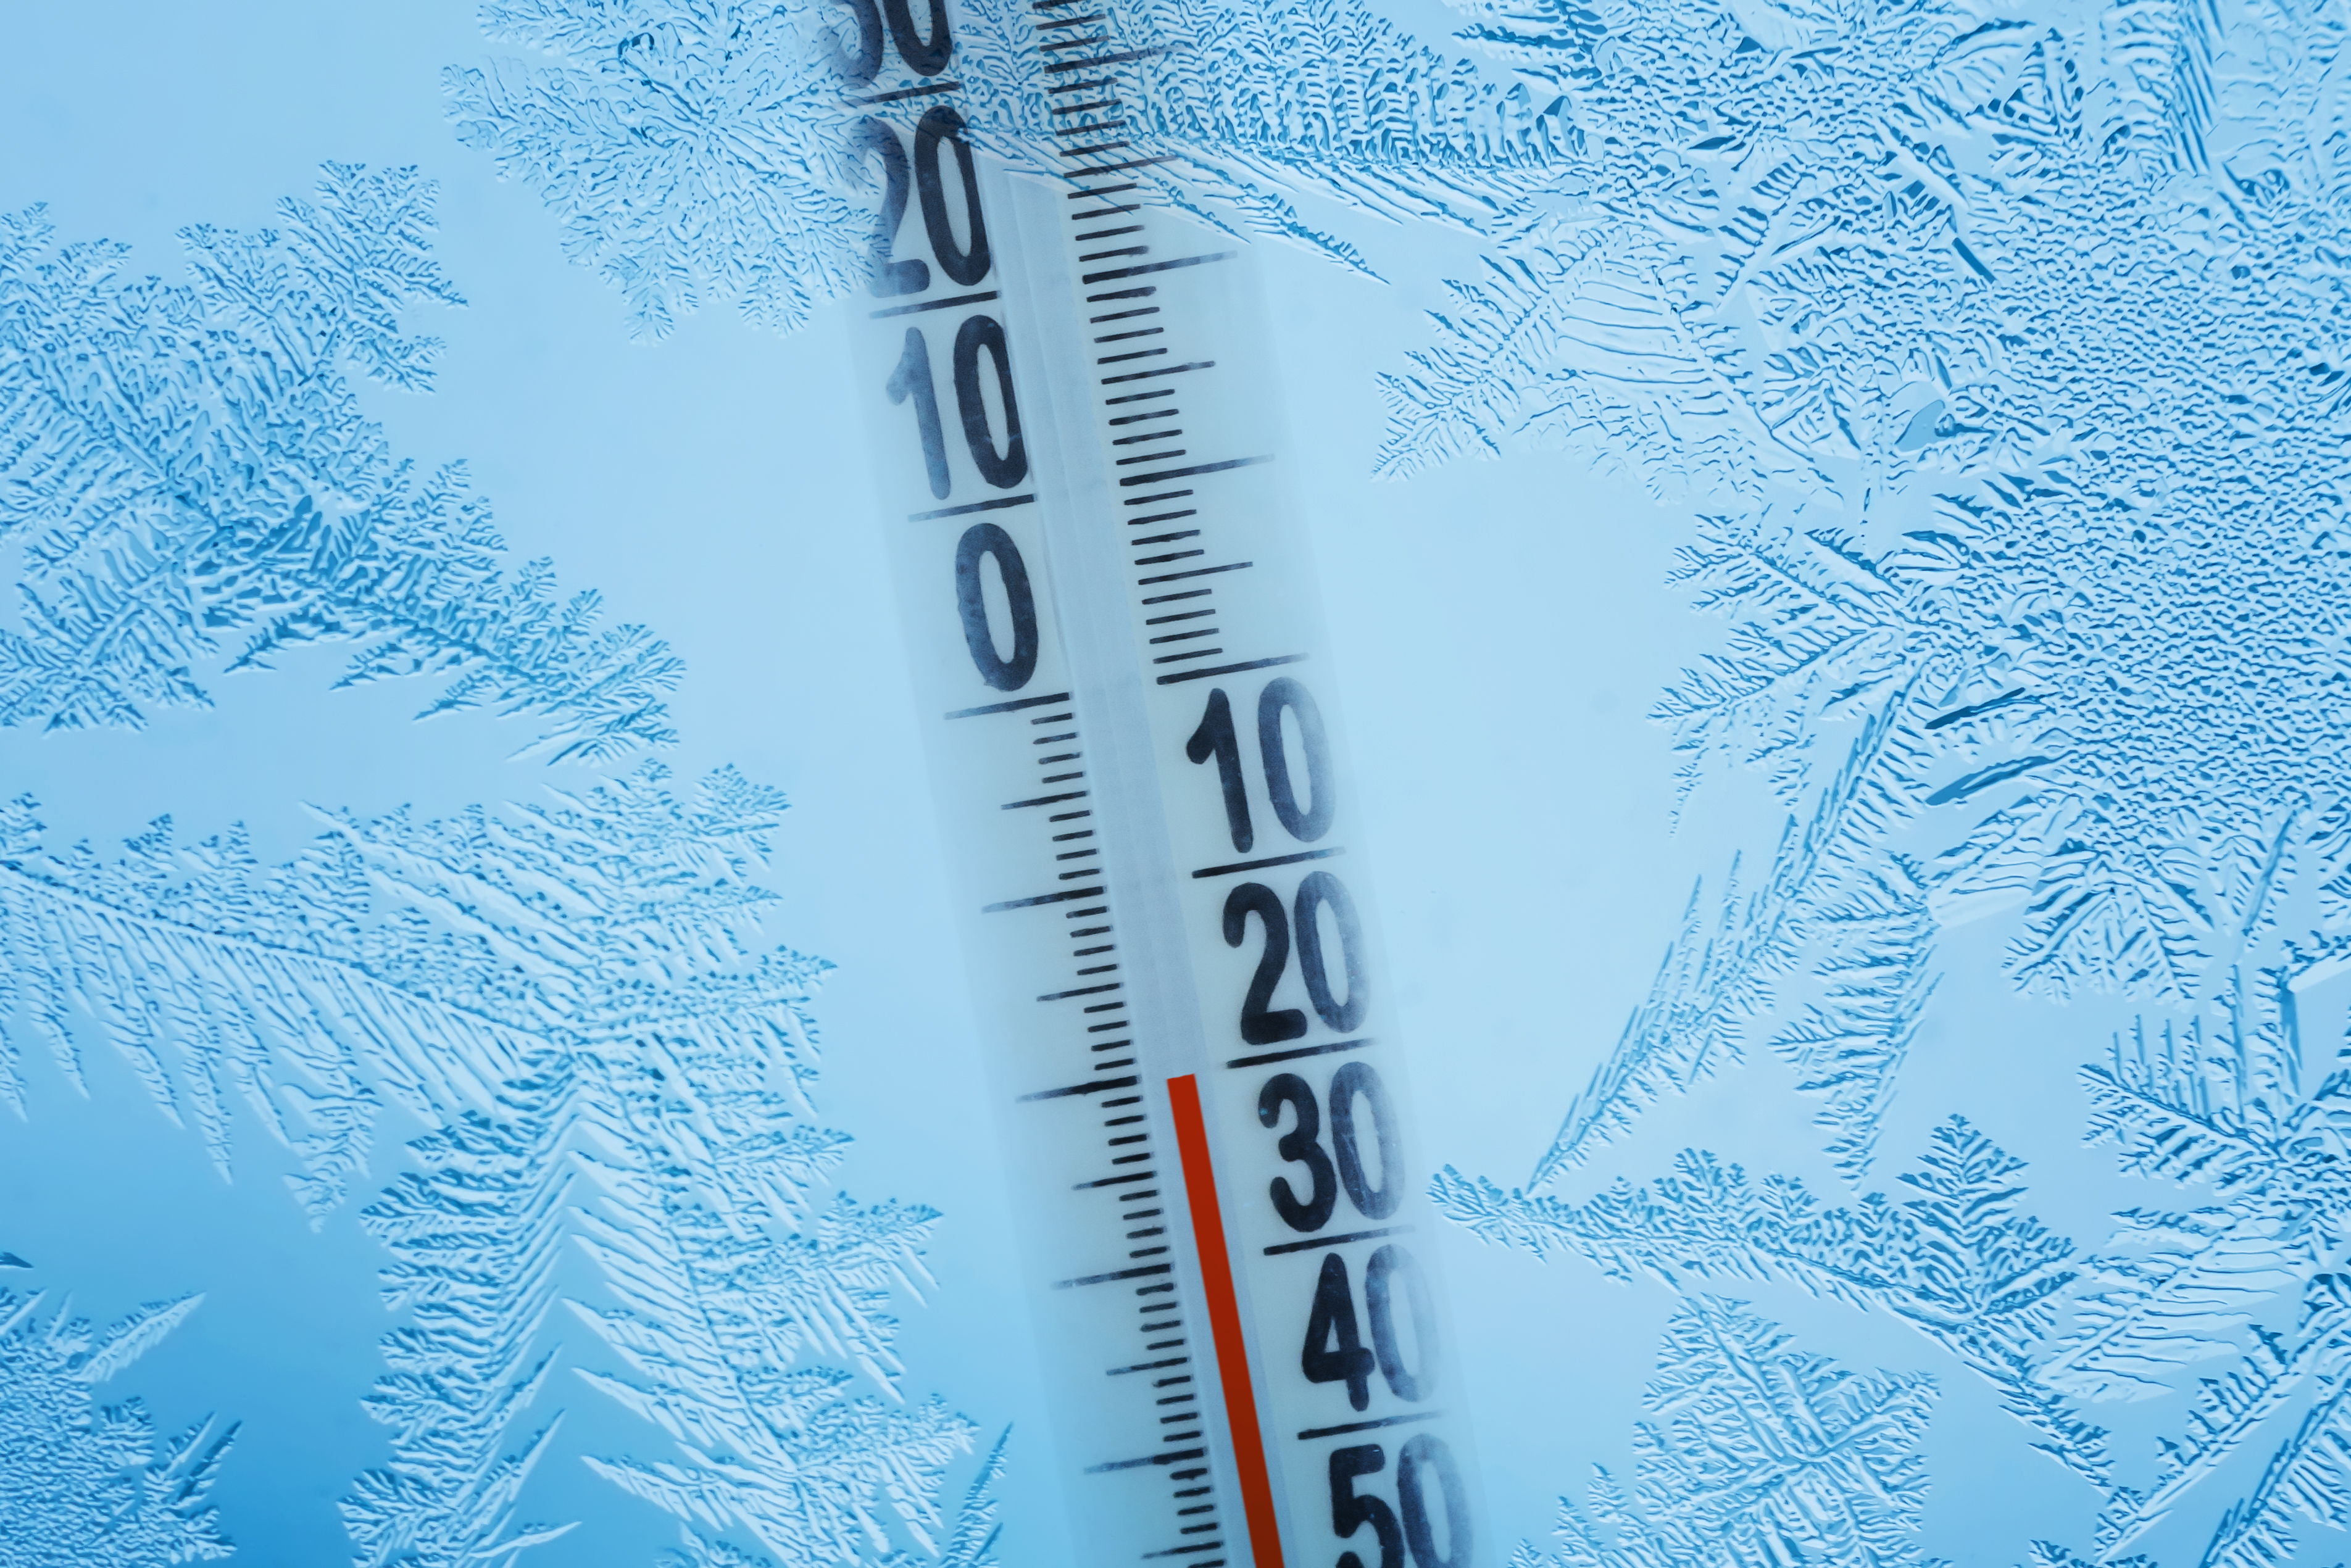 thermometer showing sub-zero reading